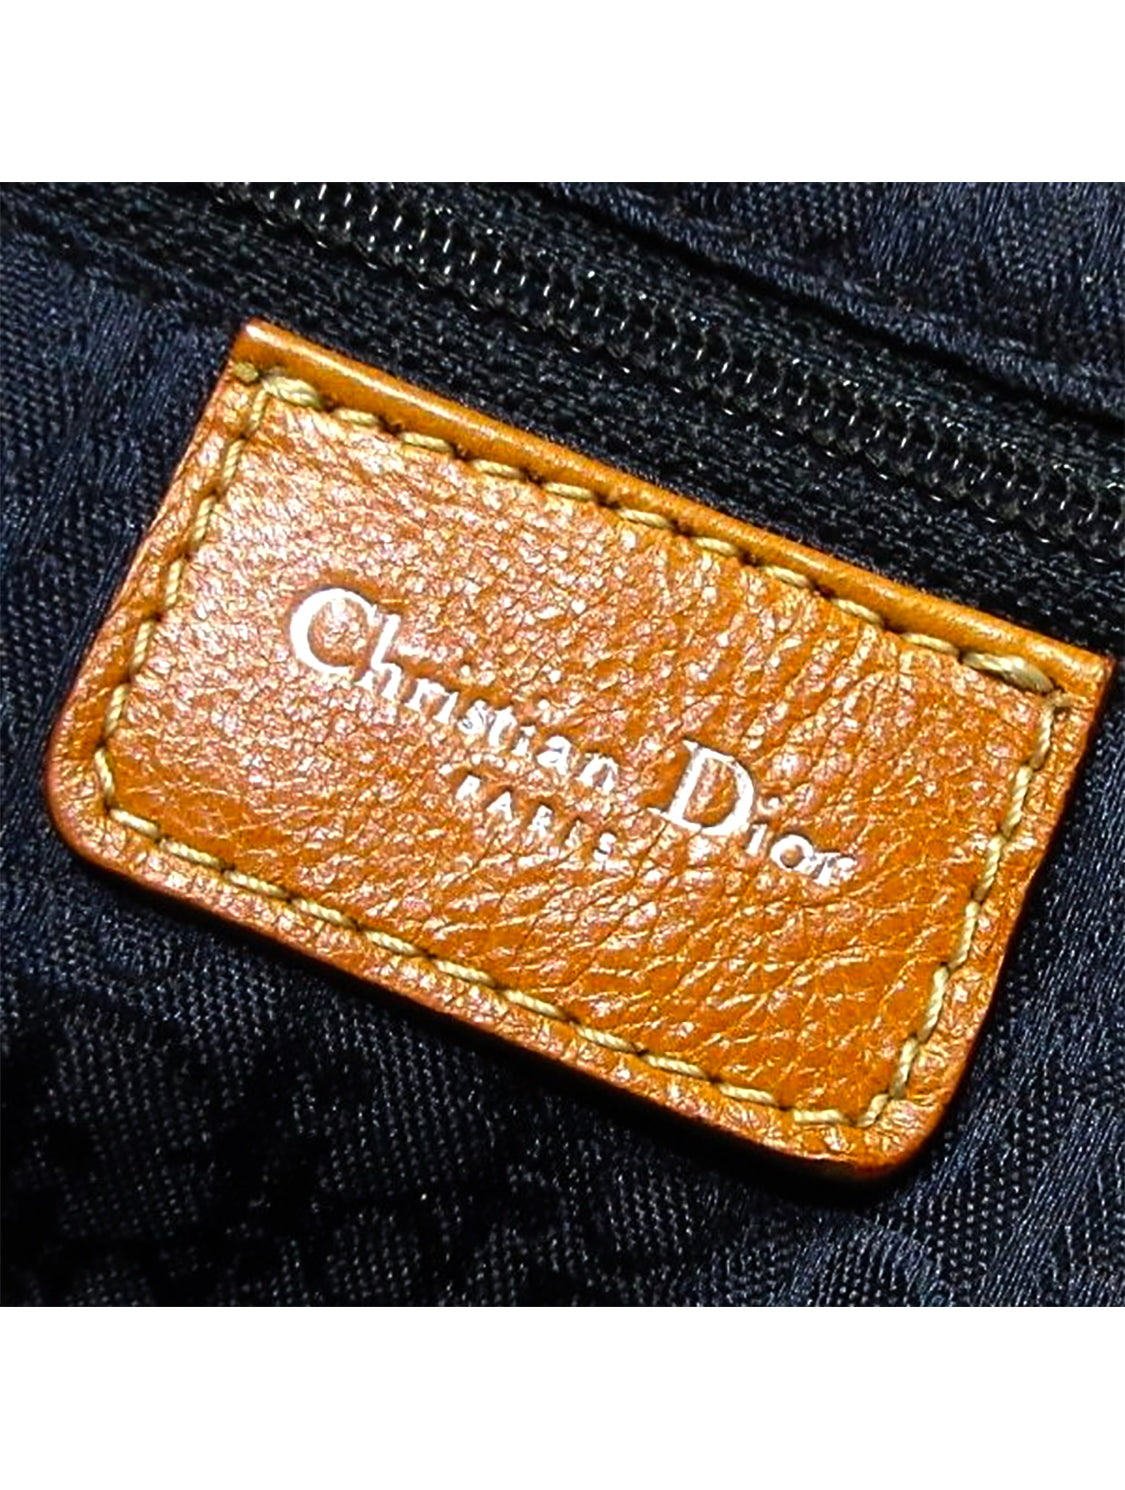 Christian Dior 2000s Limited Edition Denim Floral Embroidered Saddle Bag